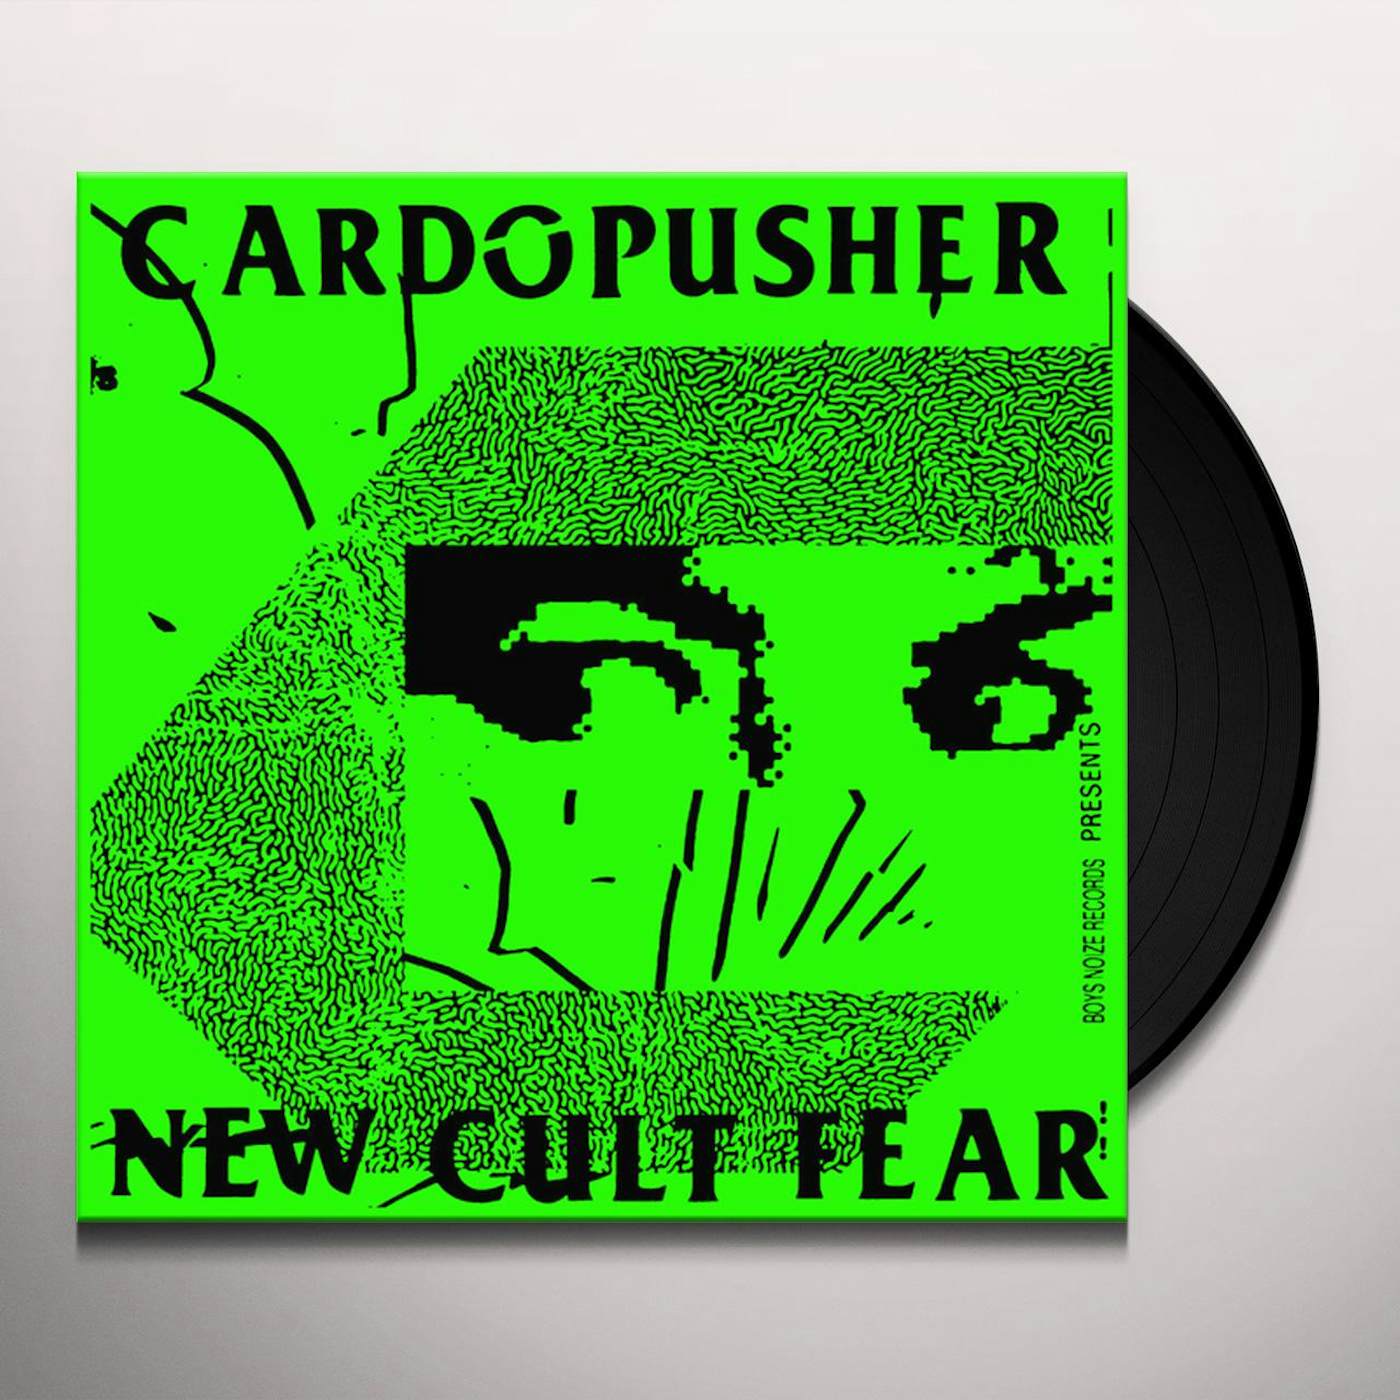 Cardopusher New Cult Fear Vinyl Record